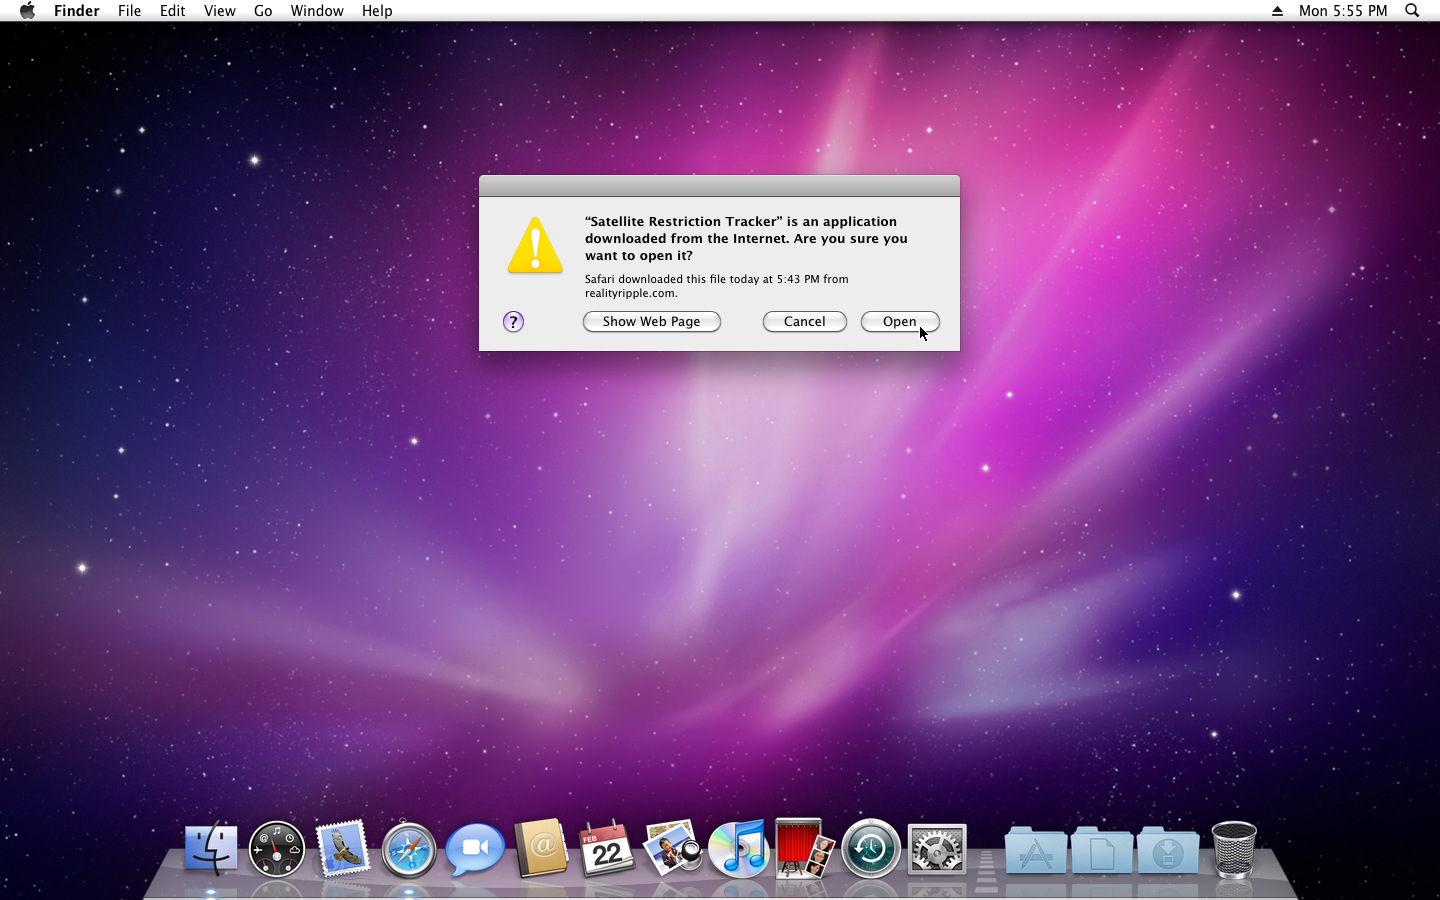 macOS 10.6
🍎